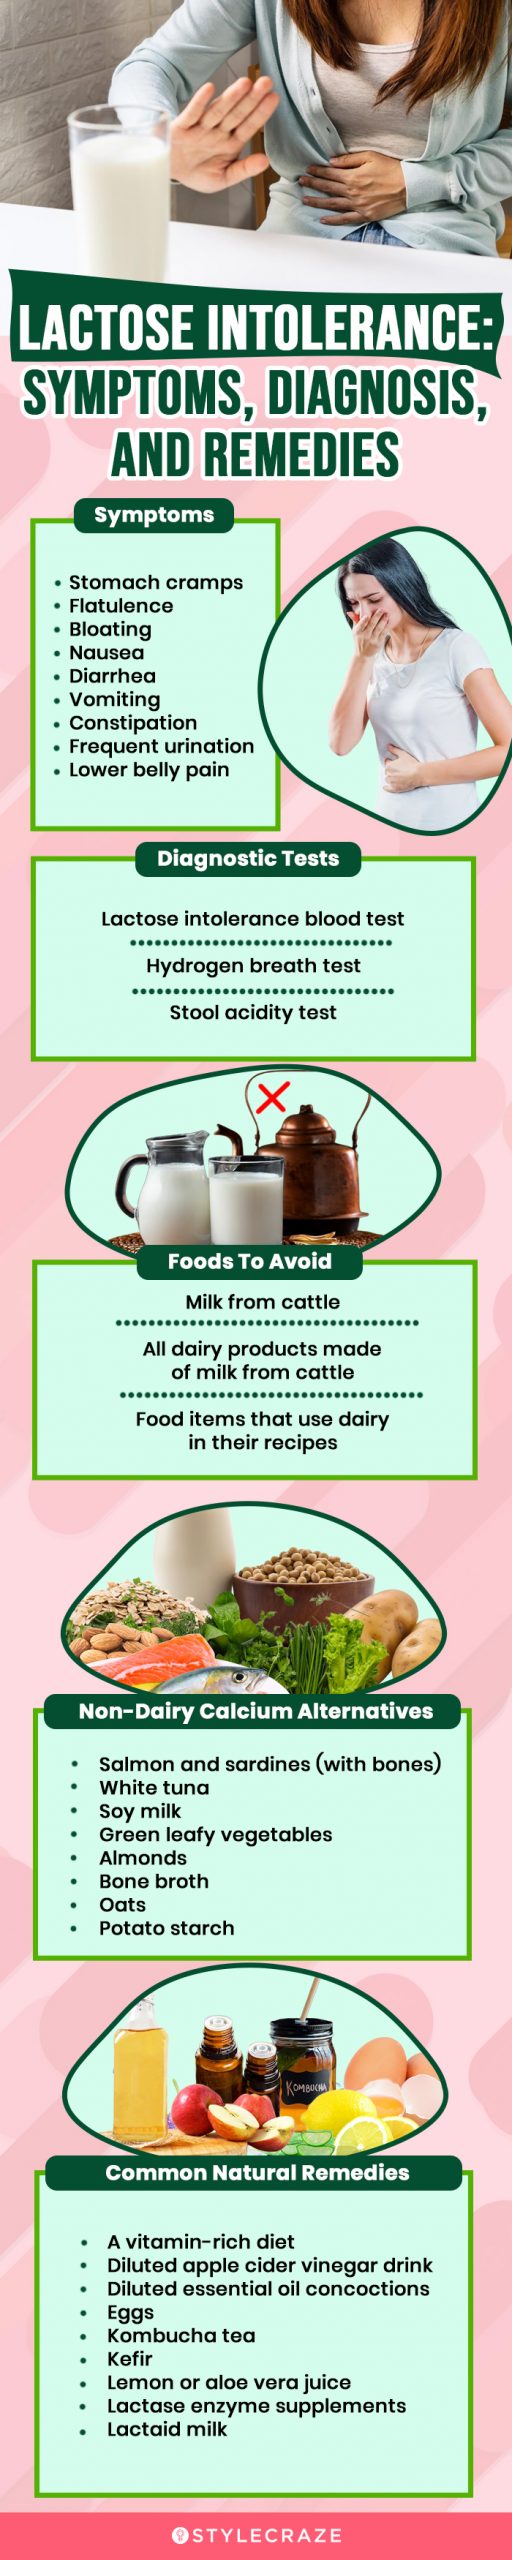 lactose intolerance symptoms, diagnosis, and remedies (infographic)